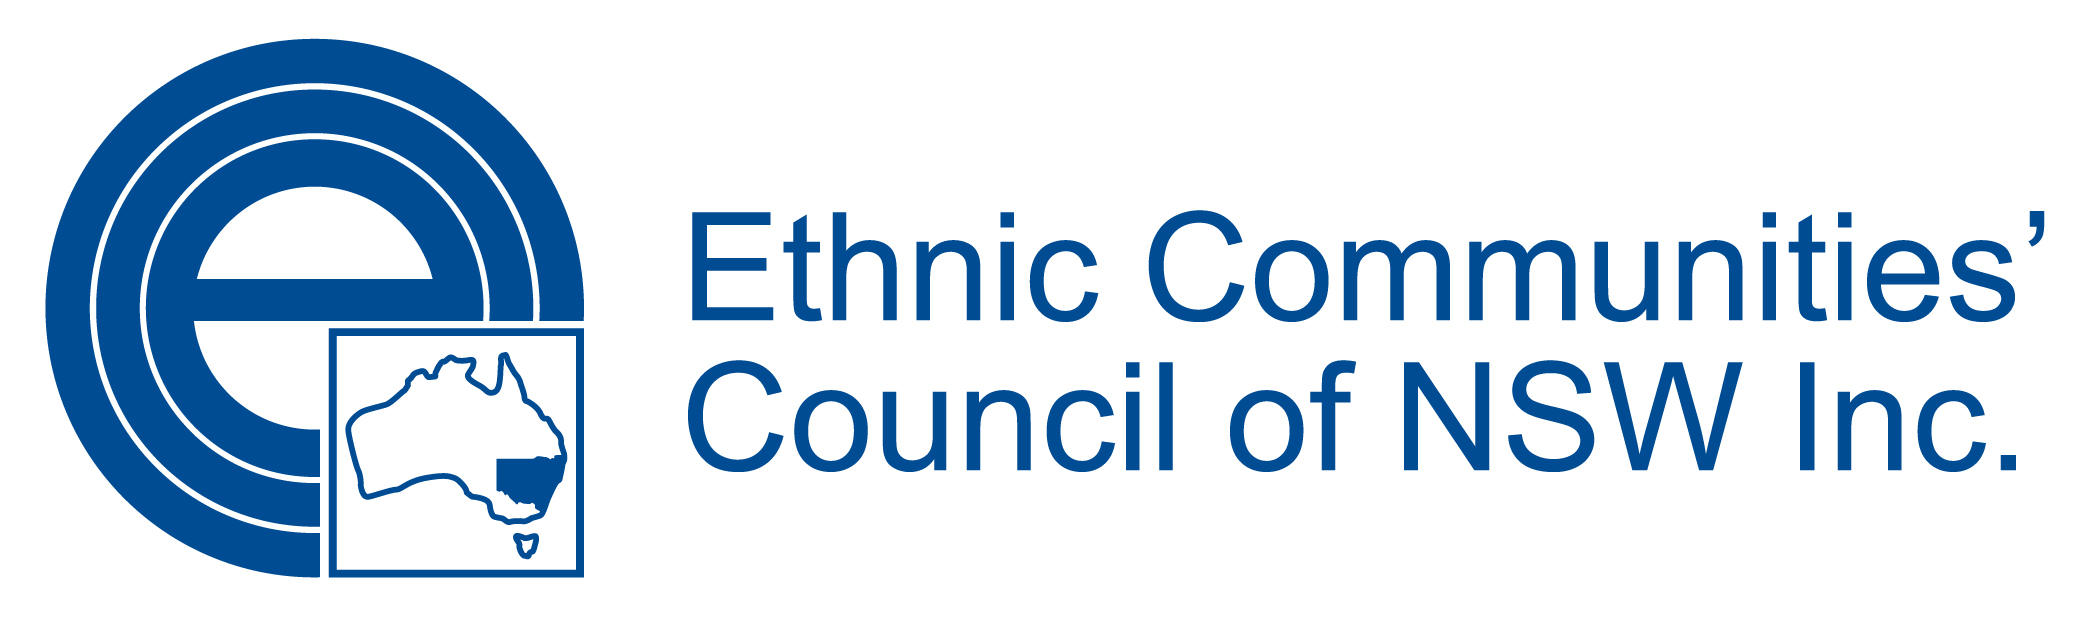 ethnic communities council of NSW logo